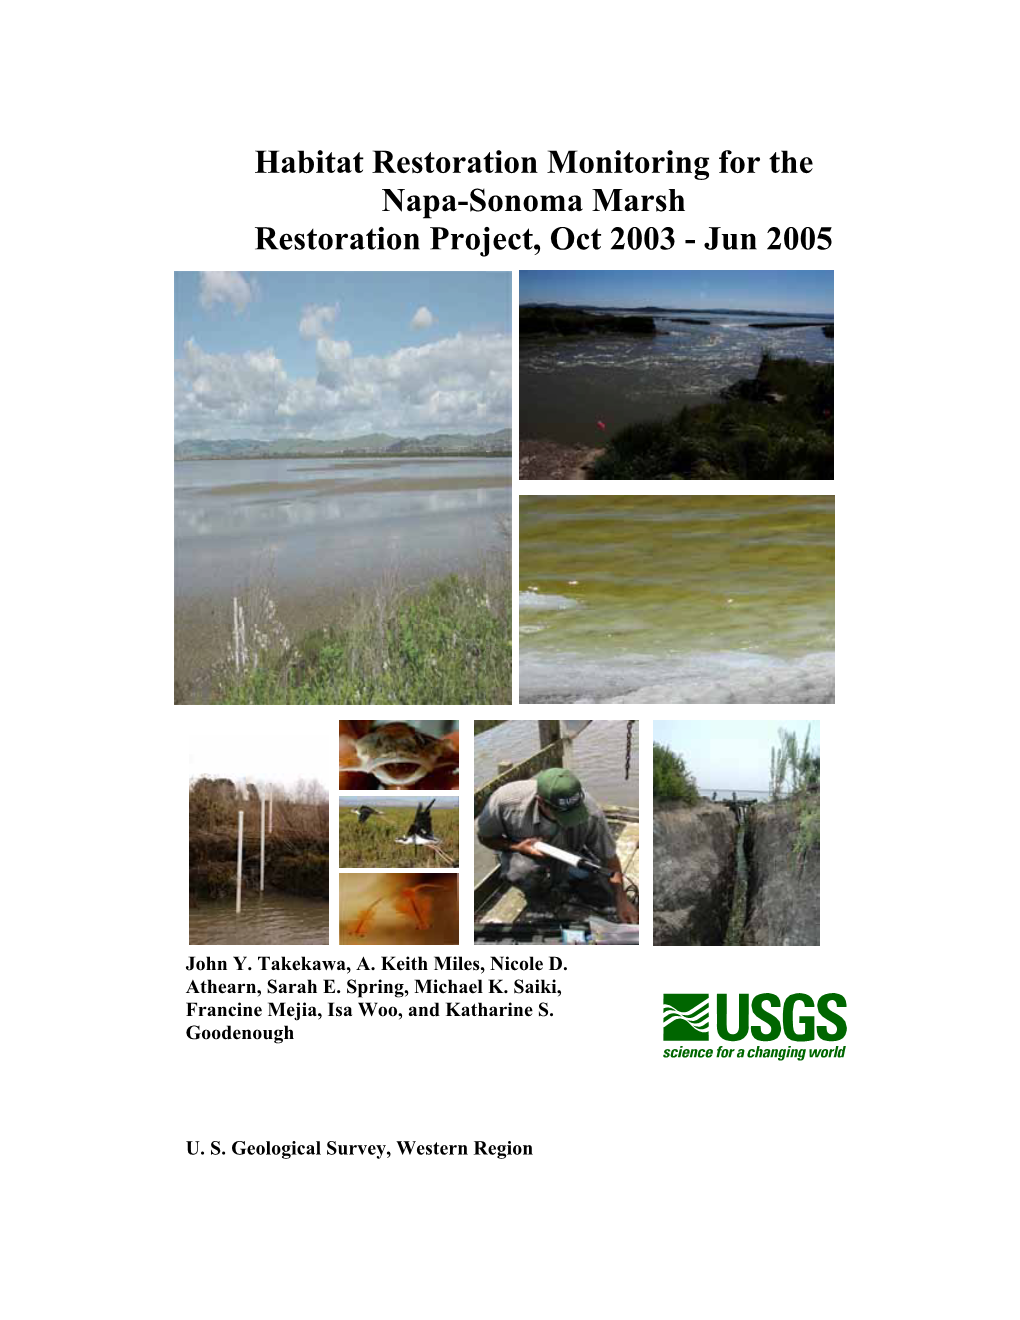 Habitat Restoration Monitoring for the Napa-Sonoma Marsh Restoration Project, Oct 2003 - Jun 2005